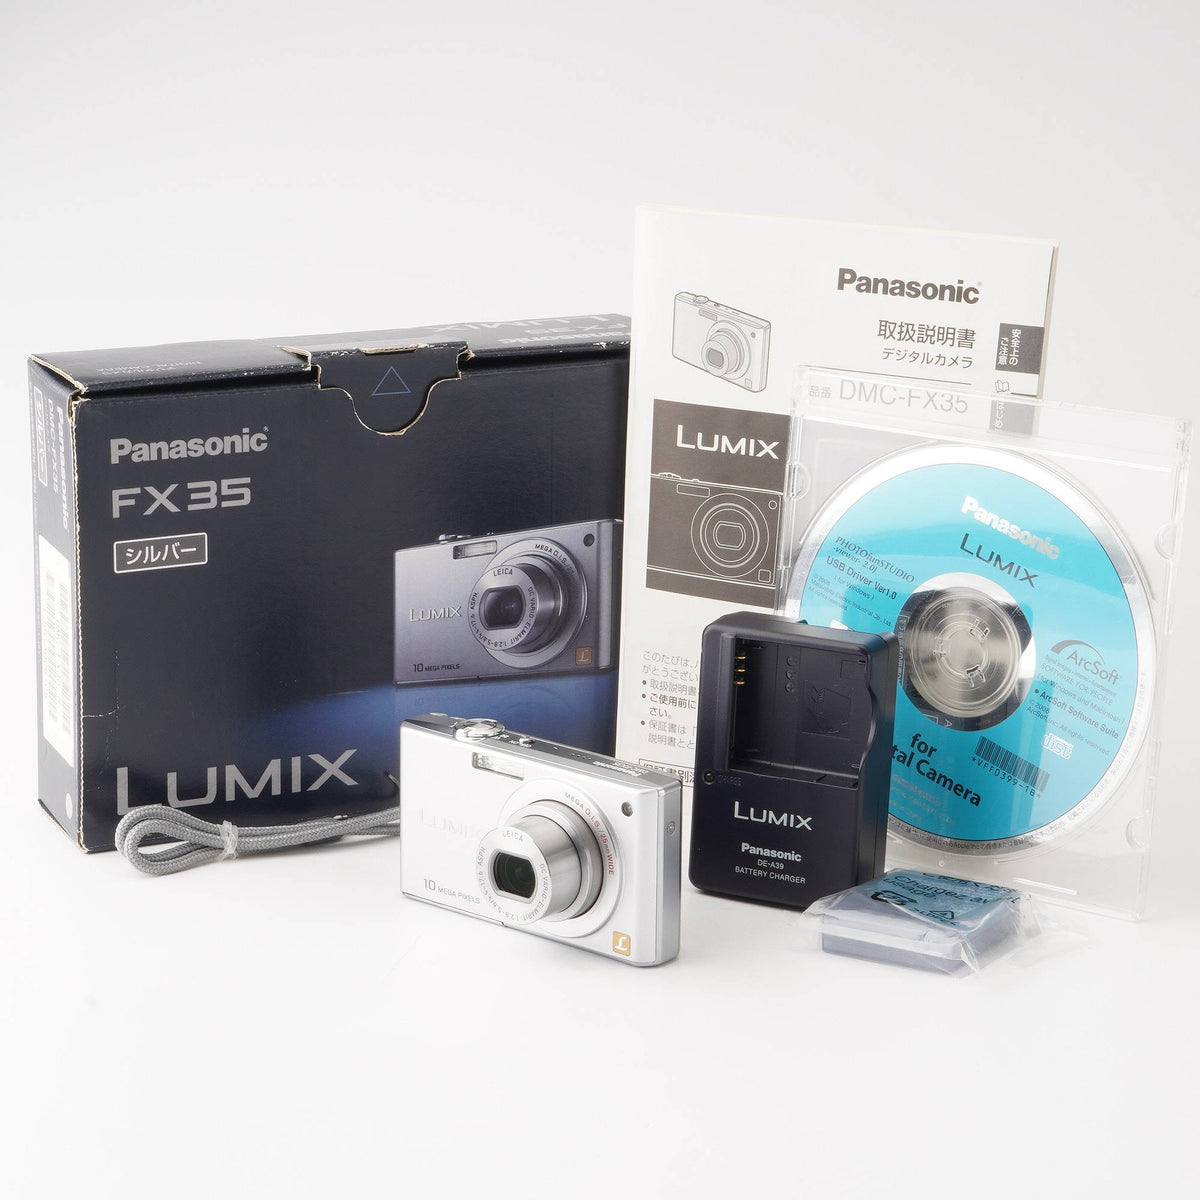 Panasonic LUMIX DMC-FX35 / LEICA DC VARIO-ELMARIT 25mm WIDE